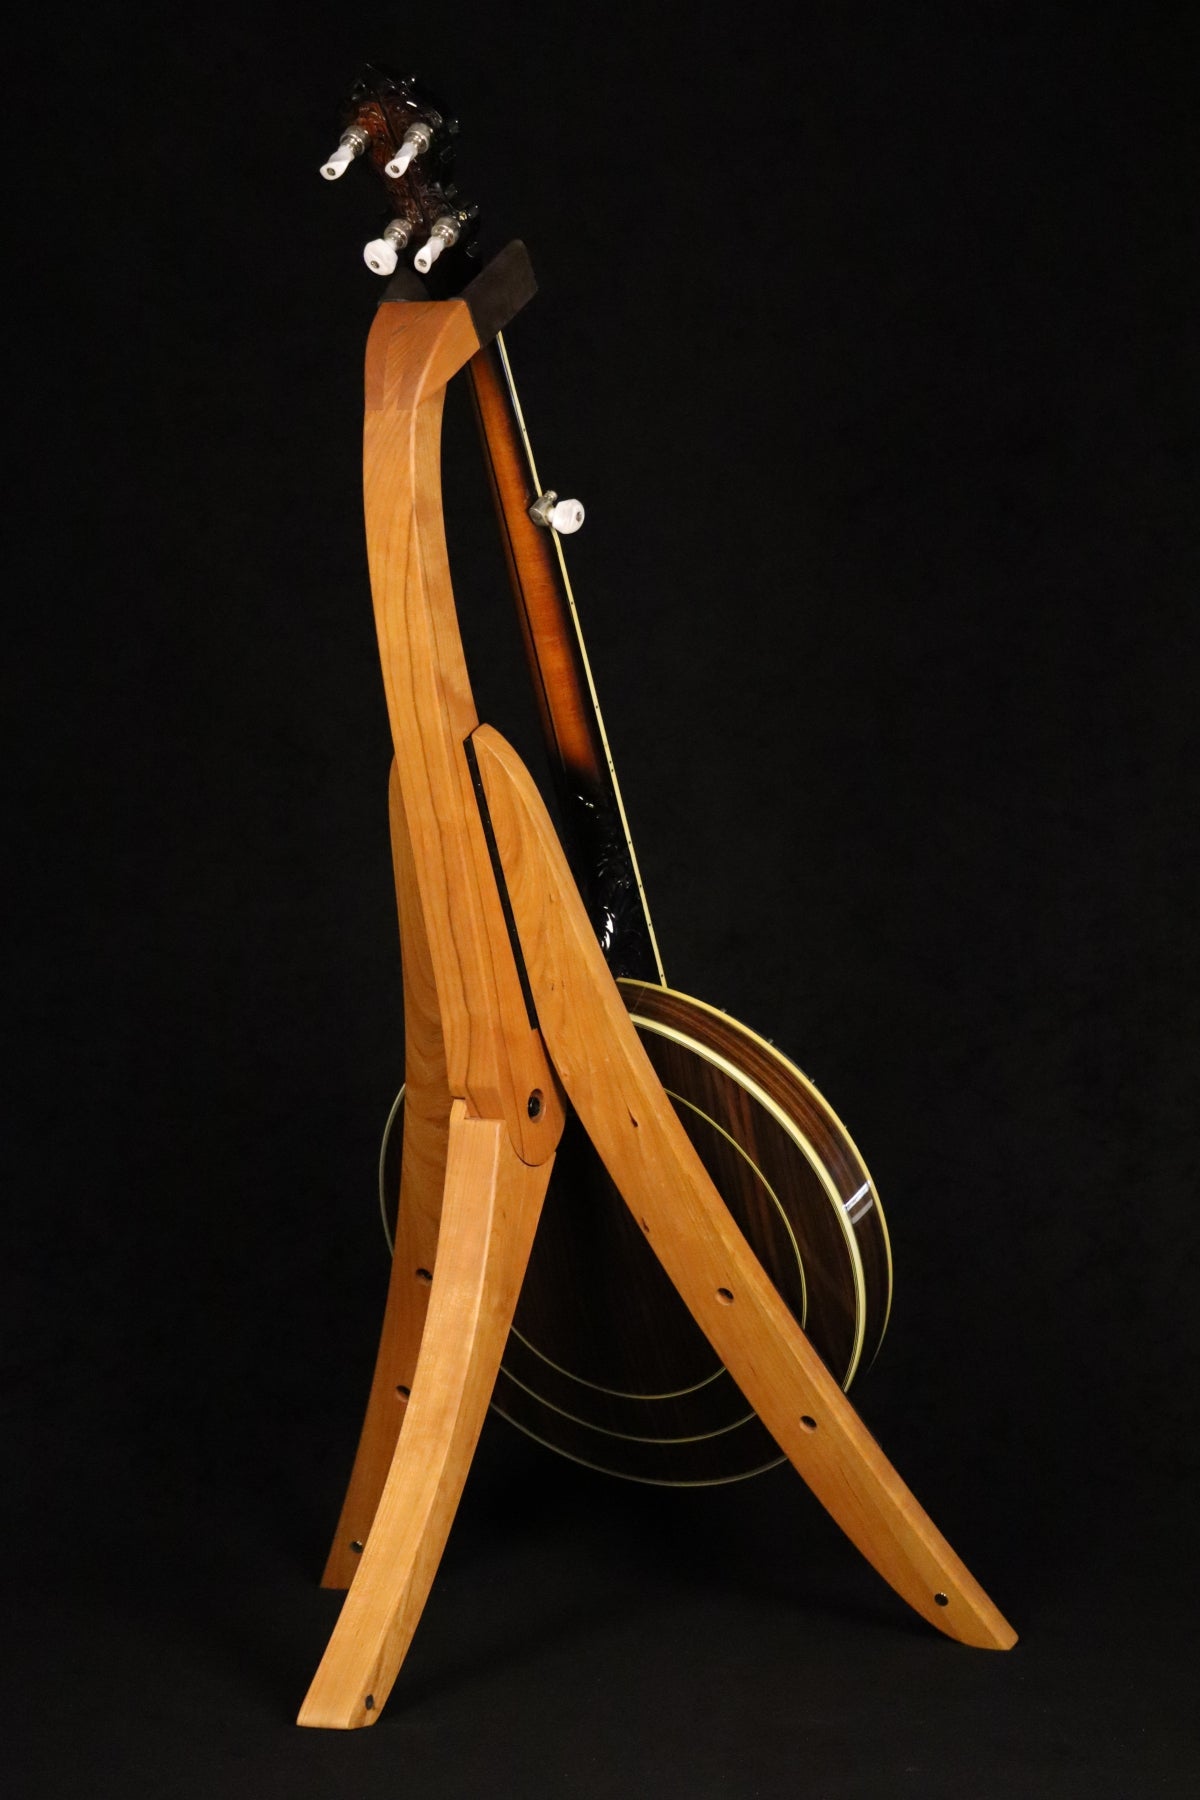 Folding cherry wood banjo floor stand full rear image with Alvarez banjo